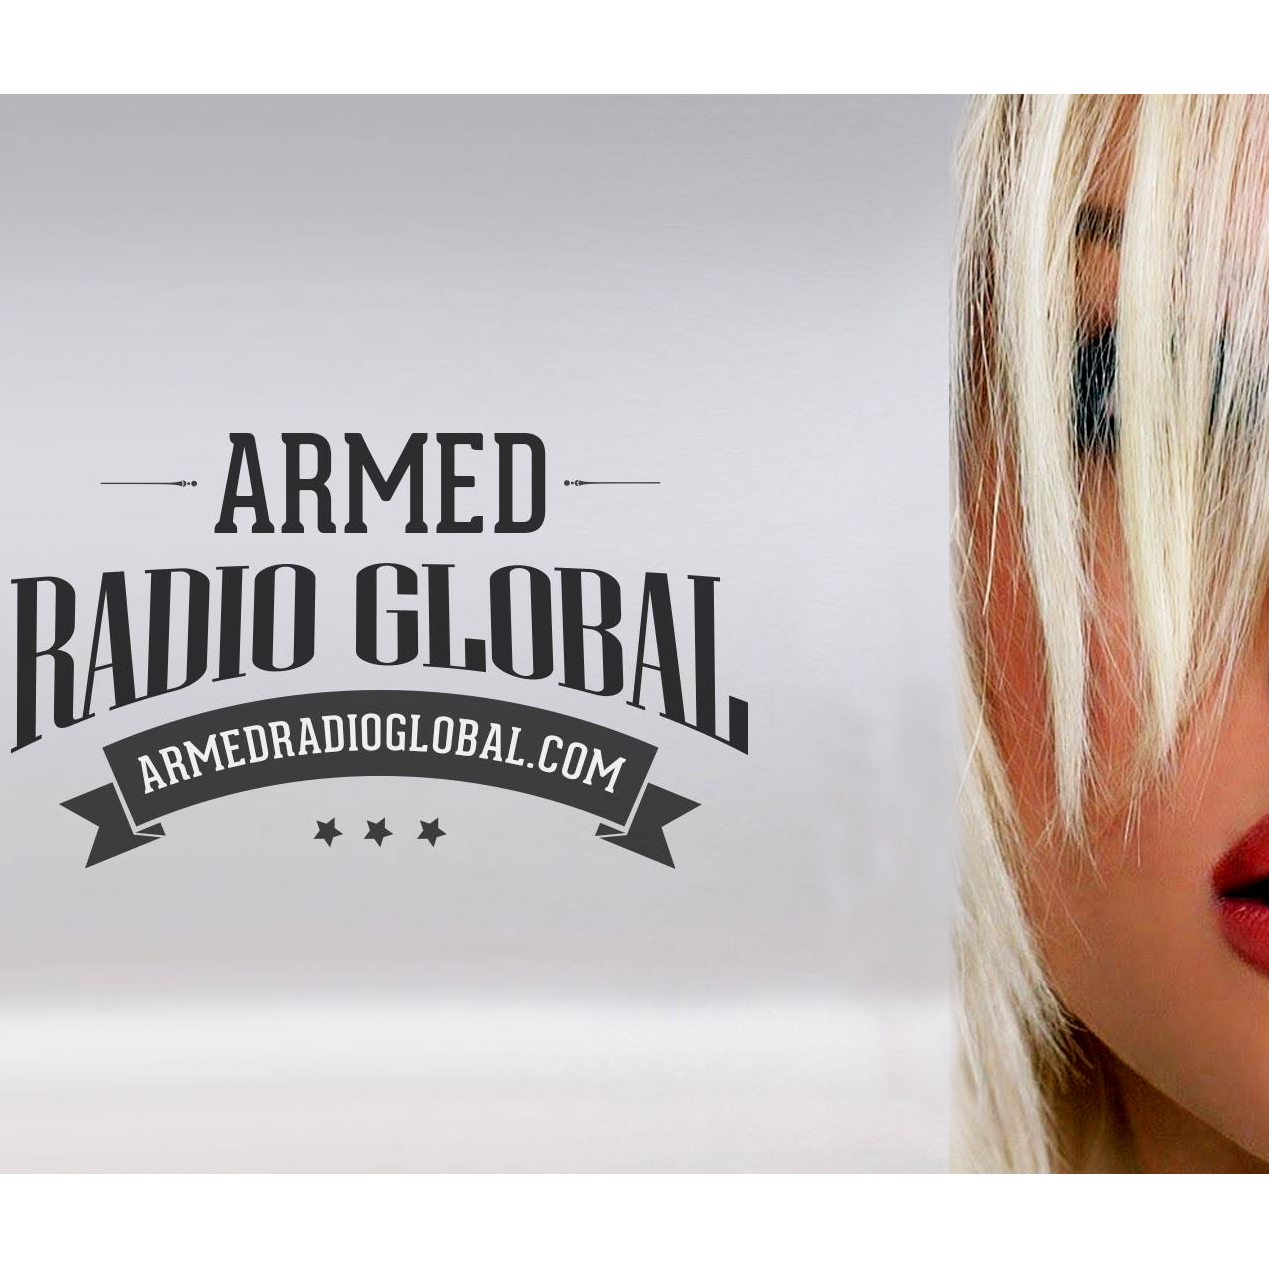 Armed Radio